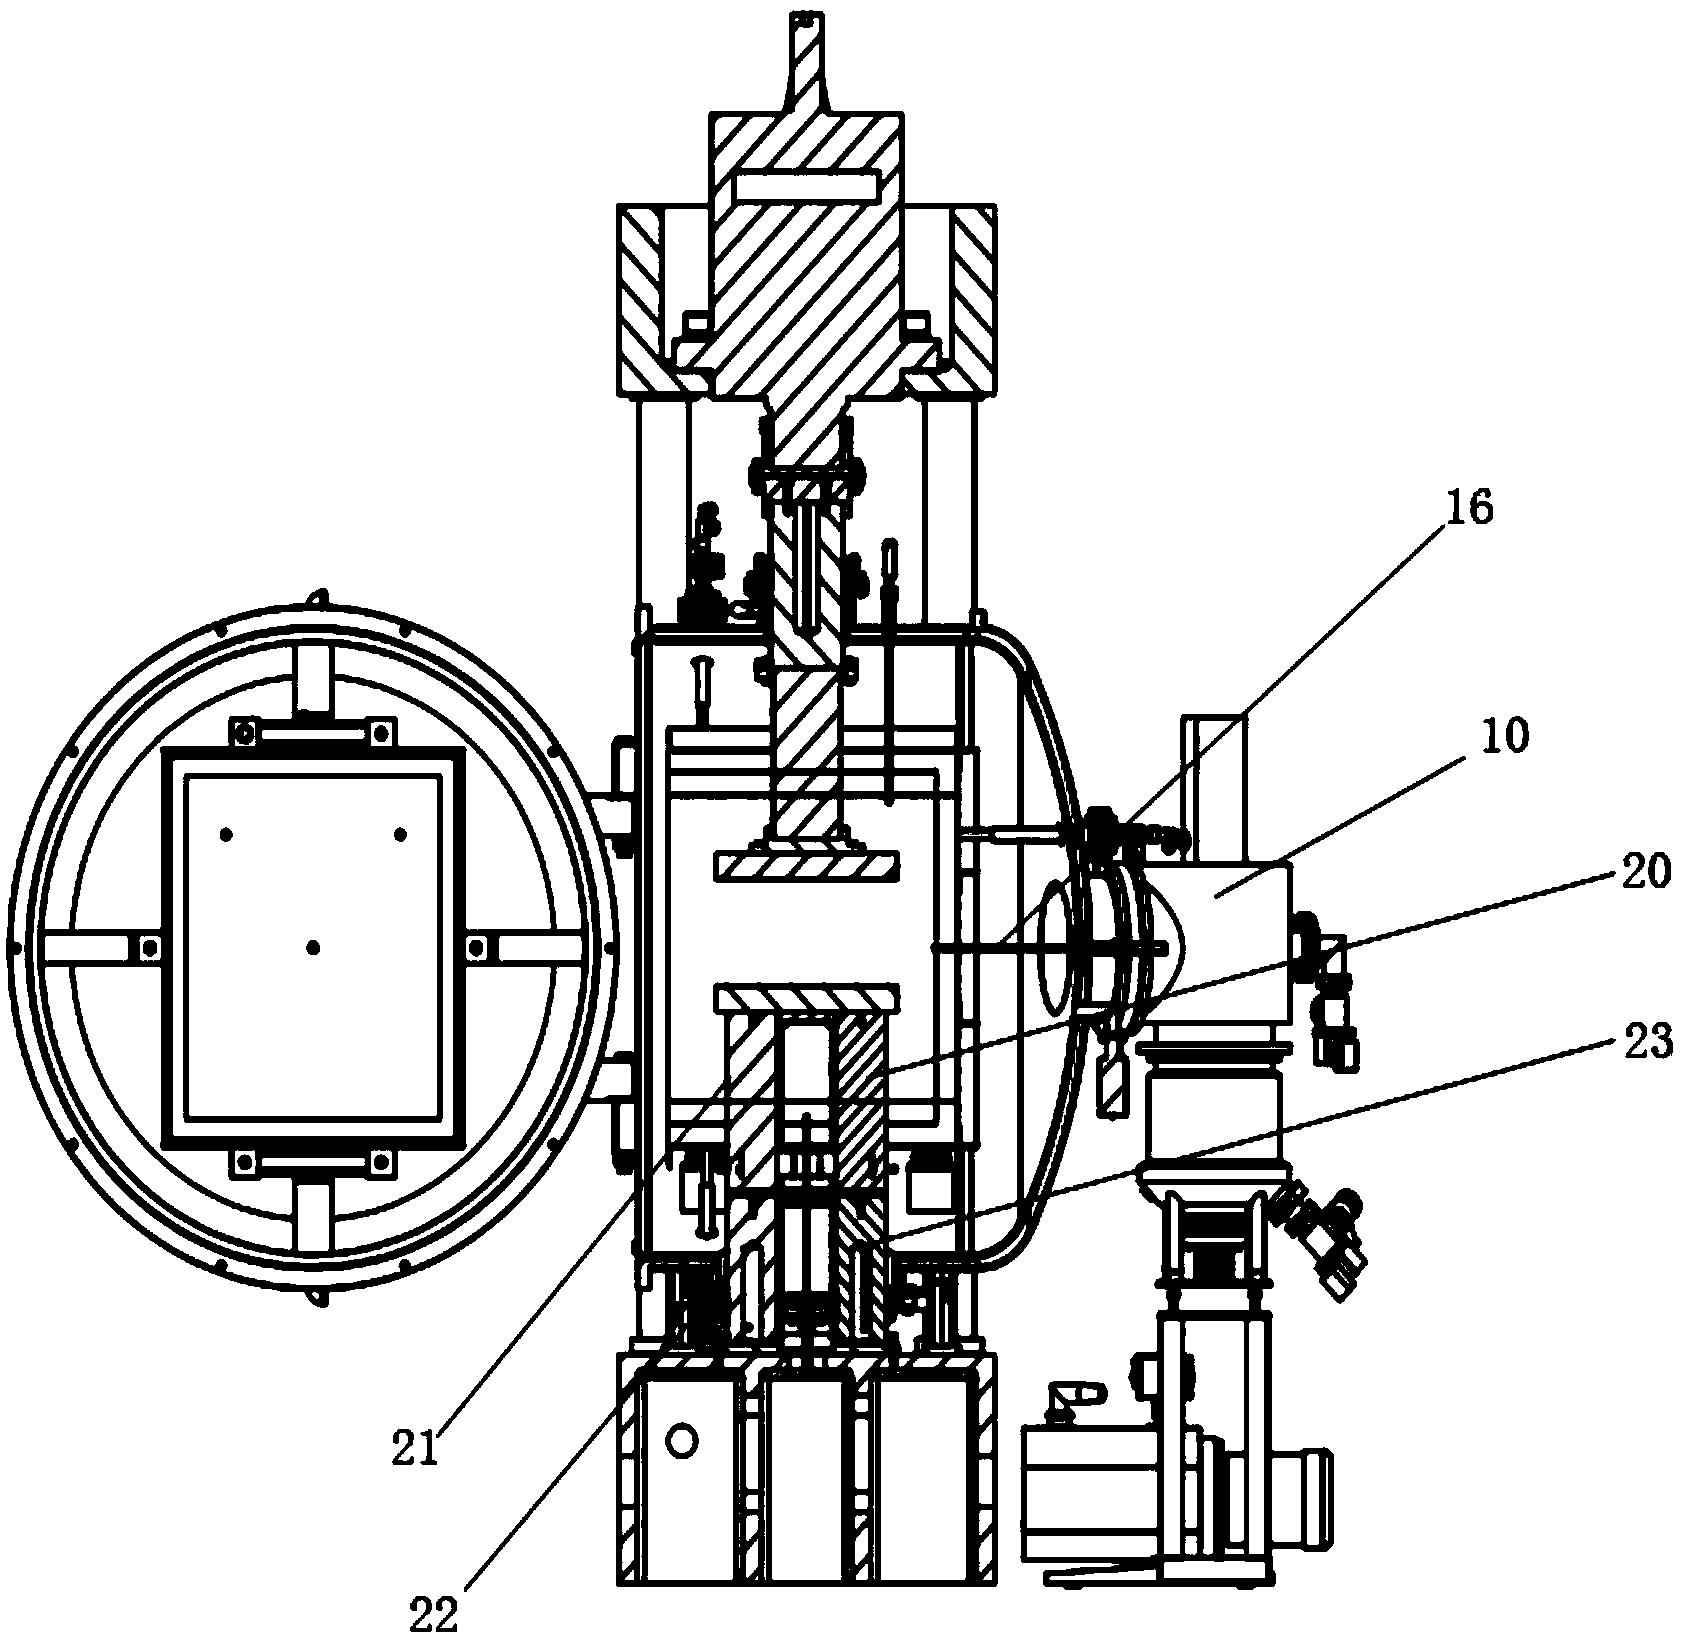 Large vacuum hot-pressing furnace